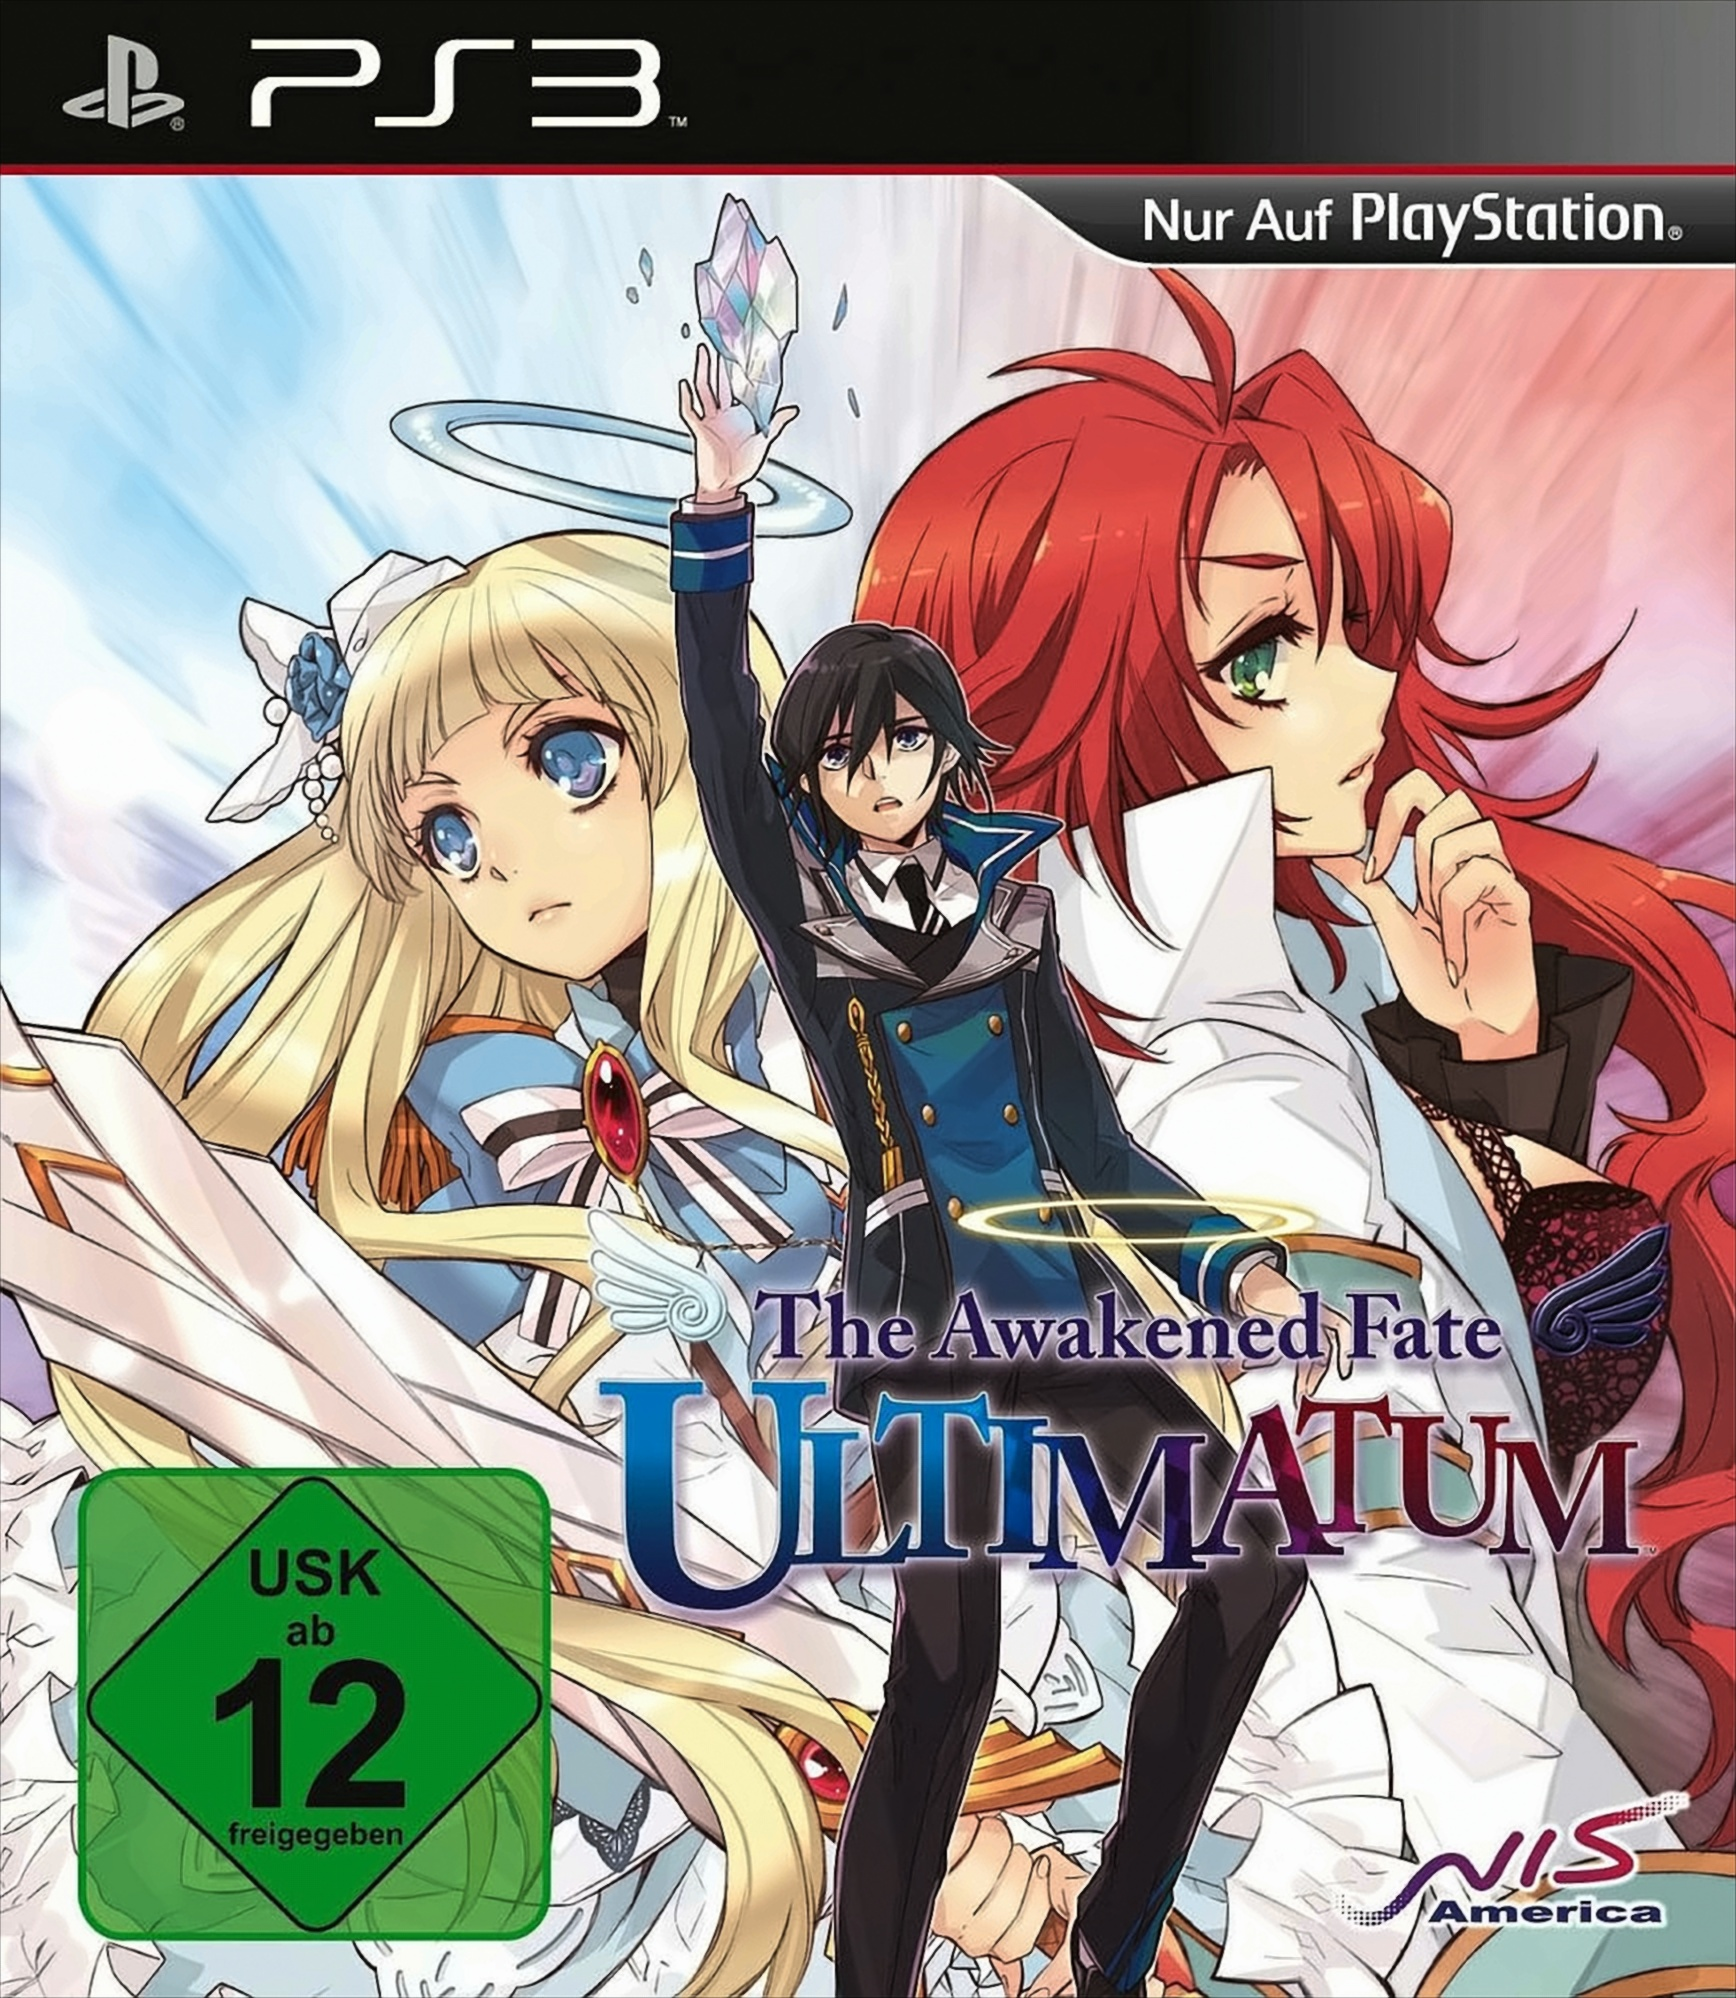 The Awakened Fate - Ultimatum 3] [PlayStation